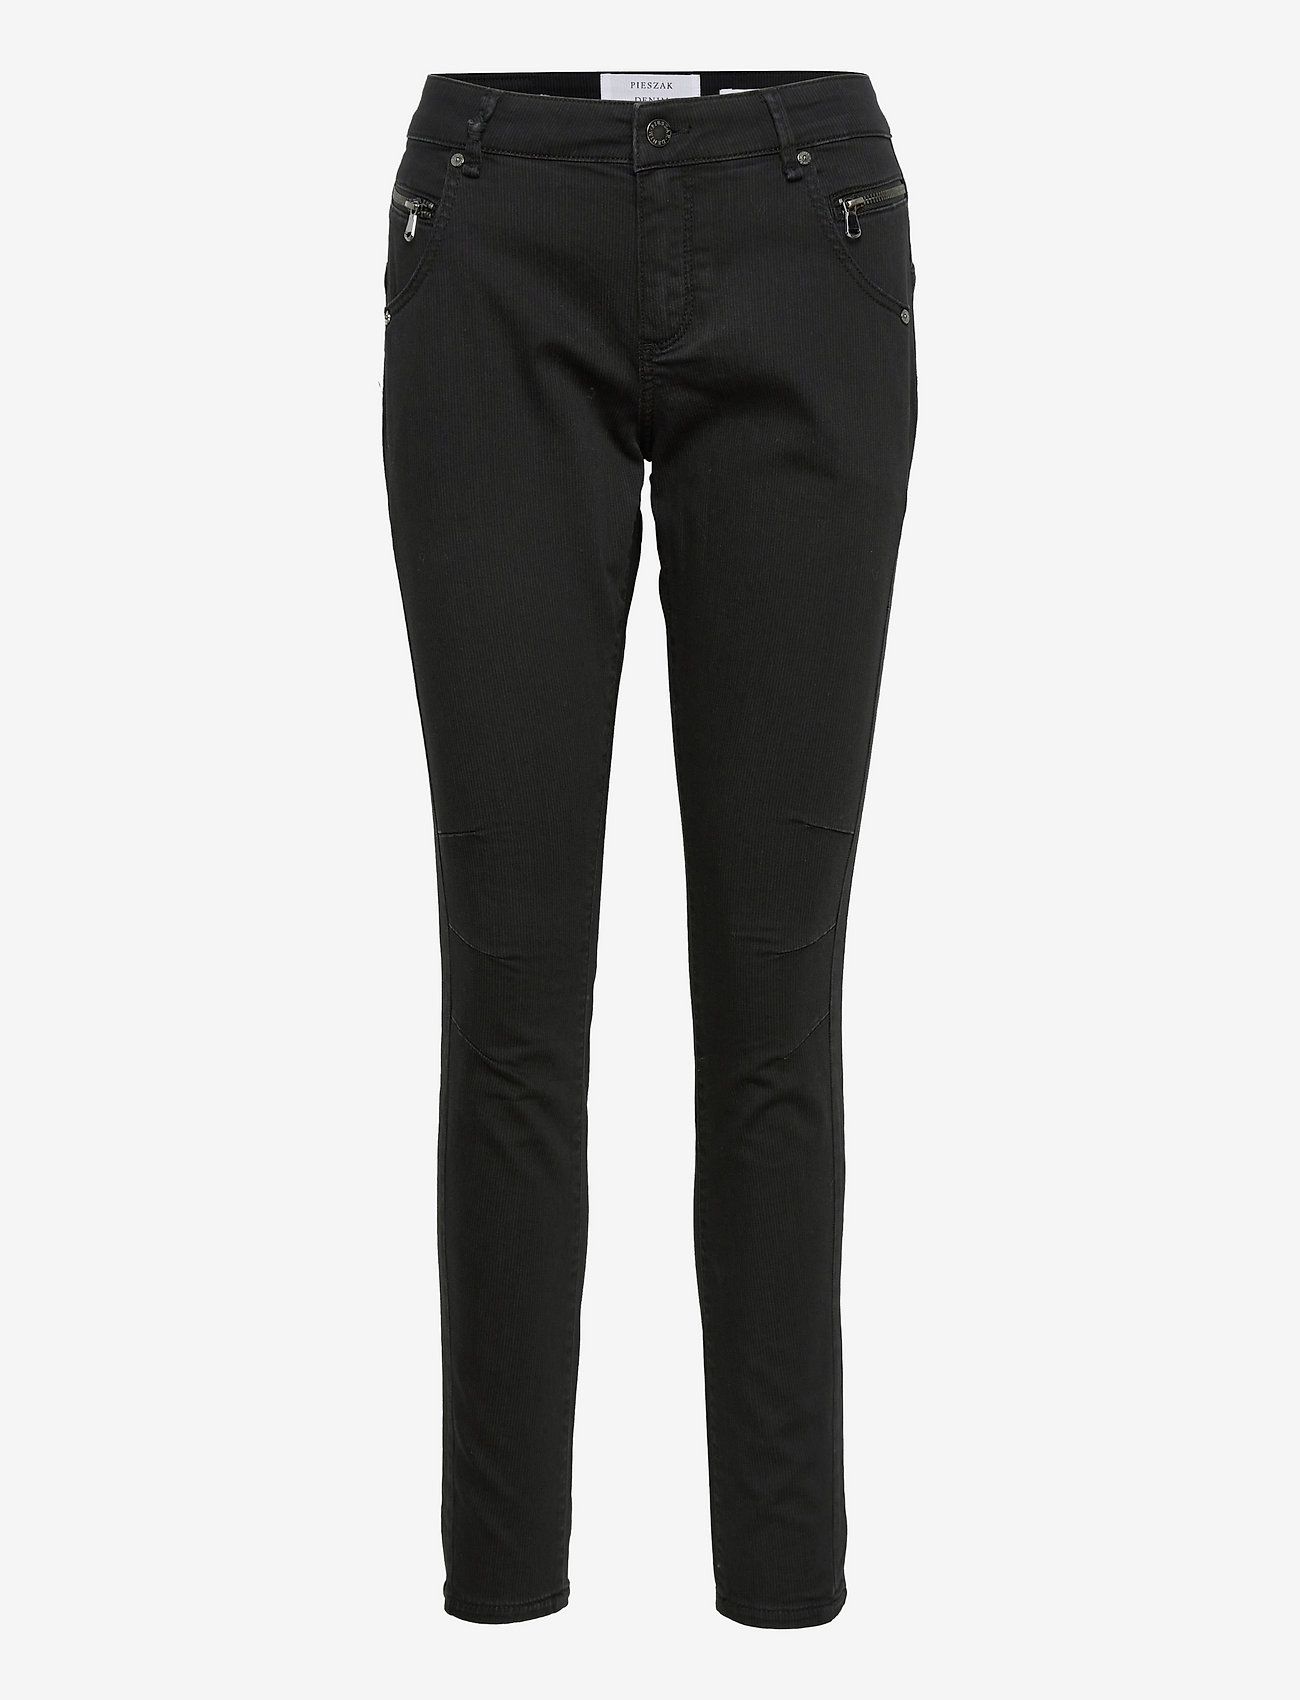 Pieszak - New Barbara Wash Black Striped - trousers with skinny legs - black - 0